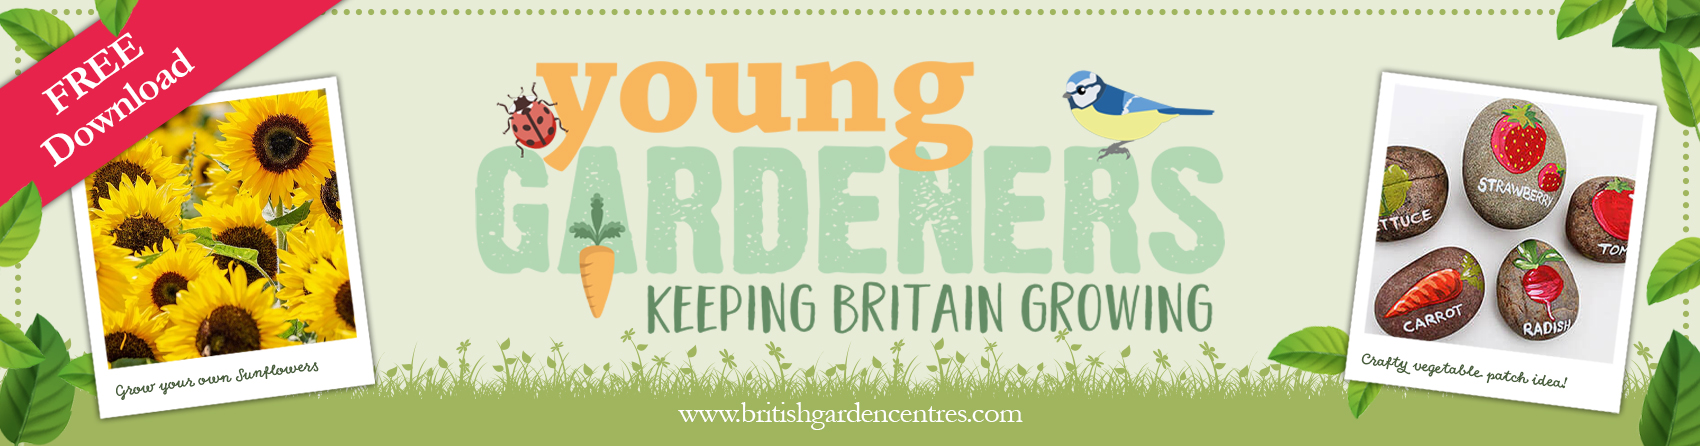 BGC web banner - young gardeners MAY